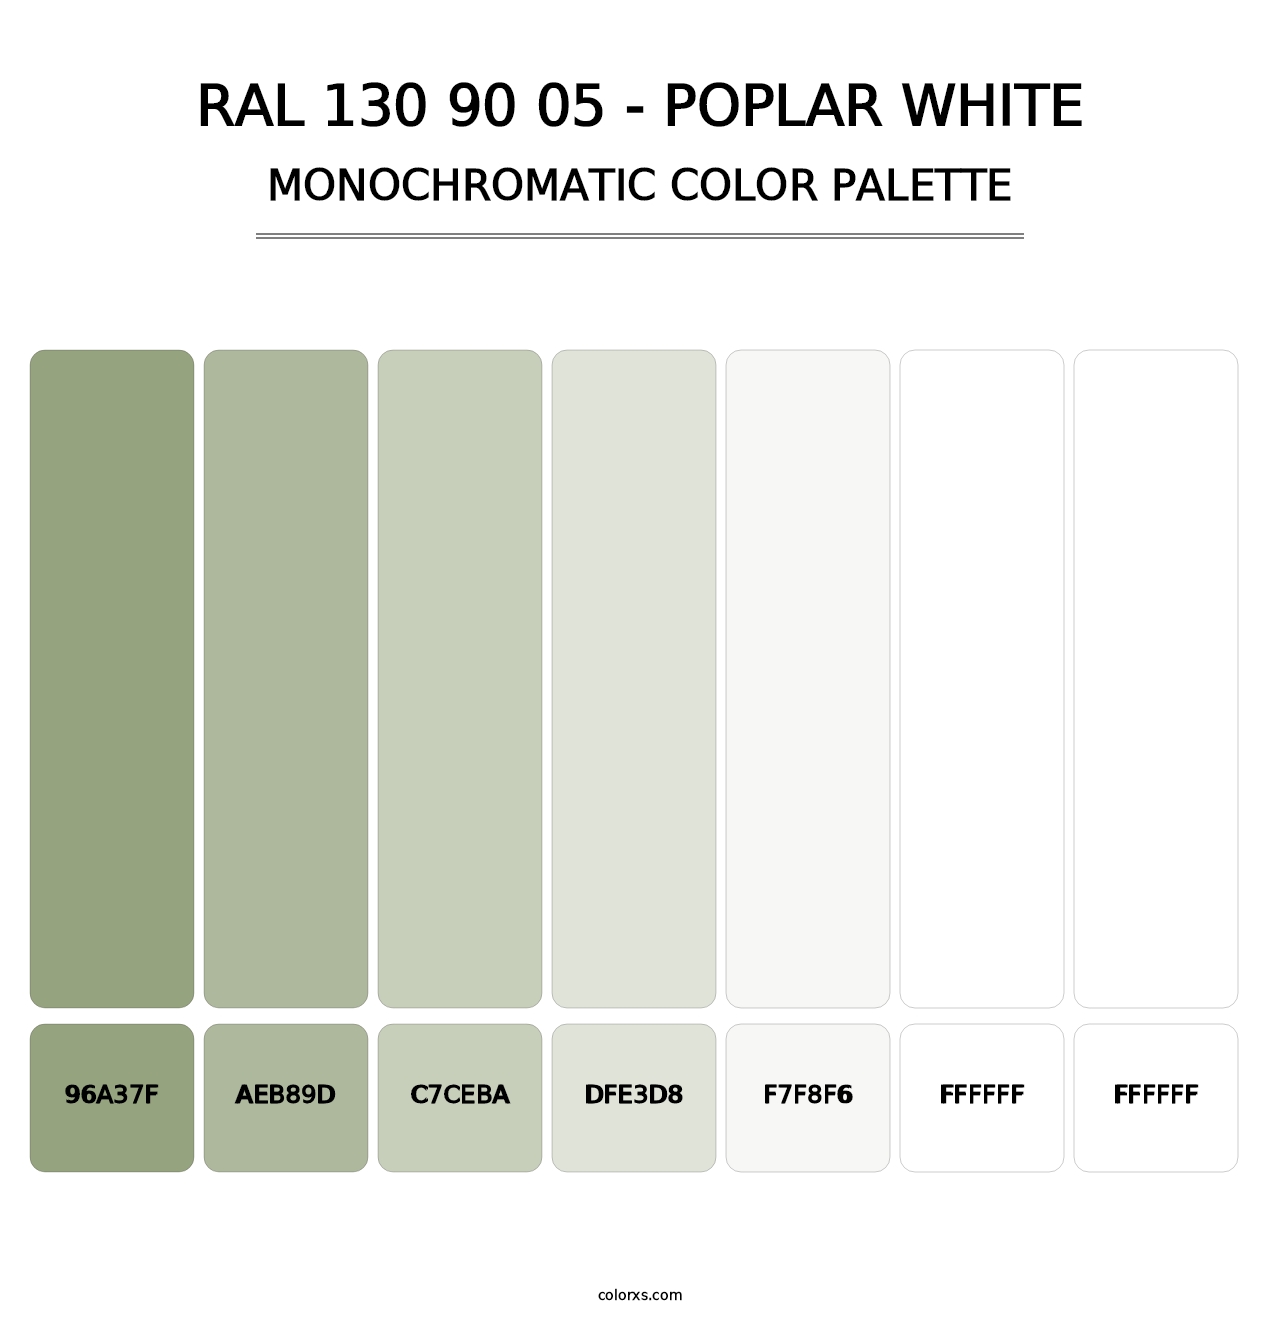 RAL 130 90 05 - Poplar White - Monochromatic Color Palette